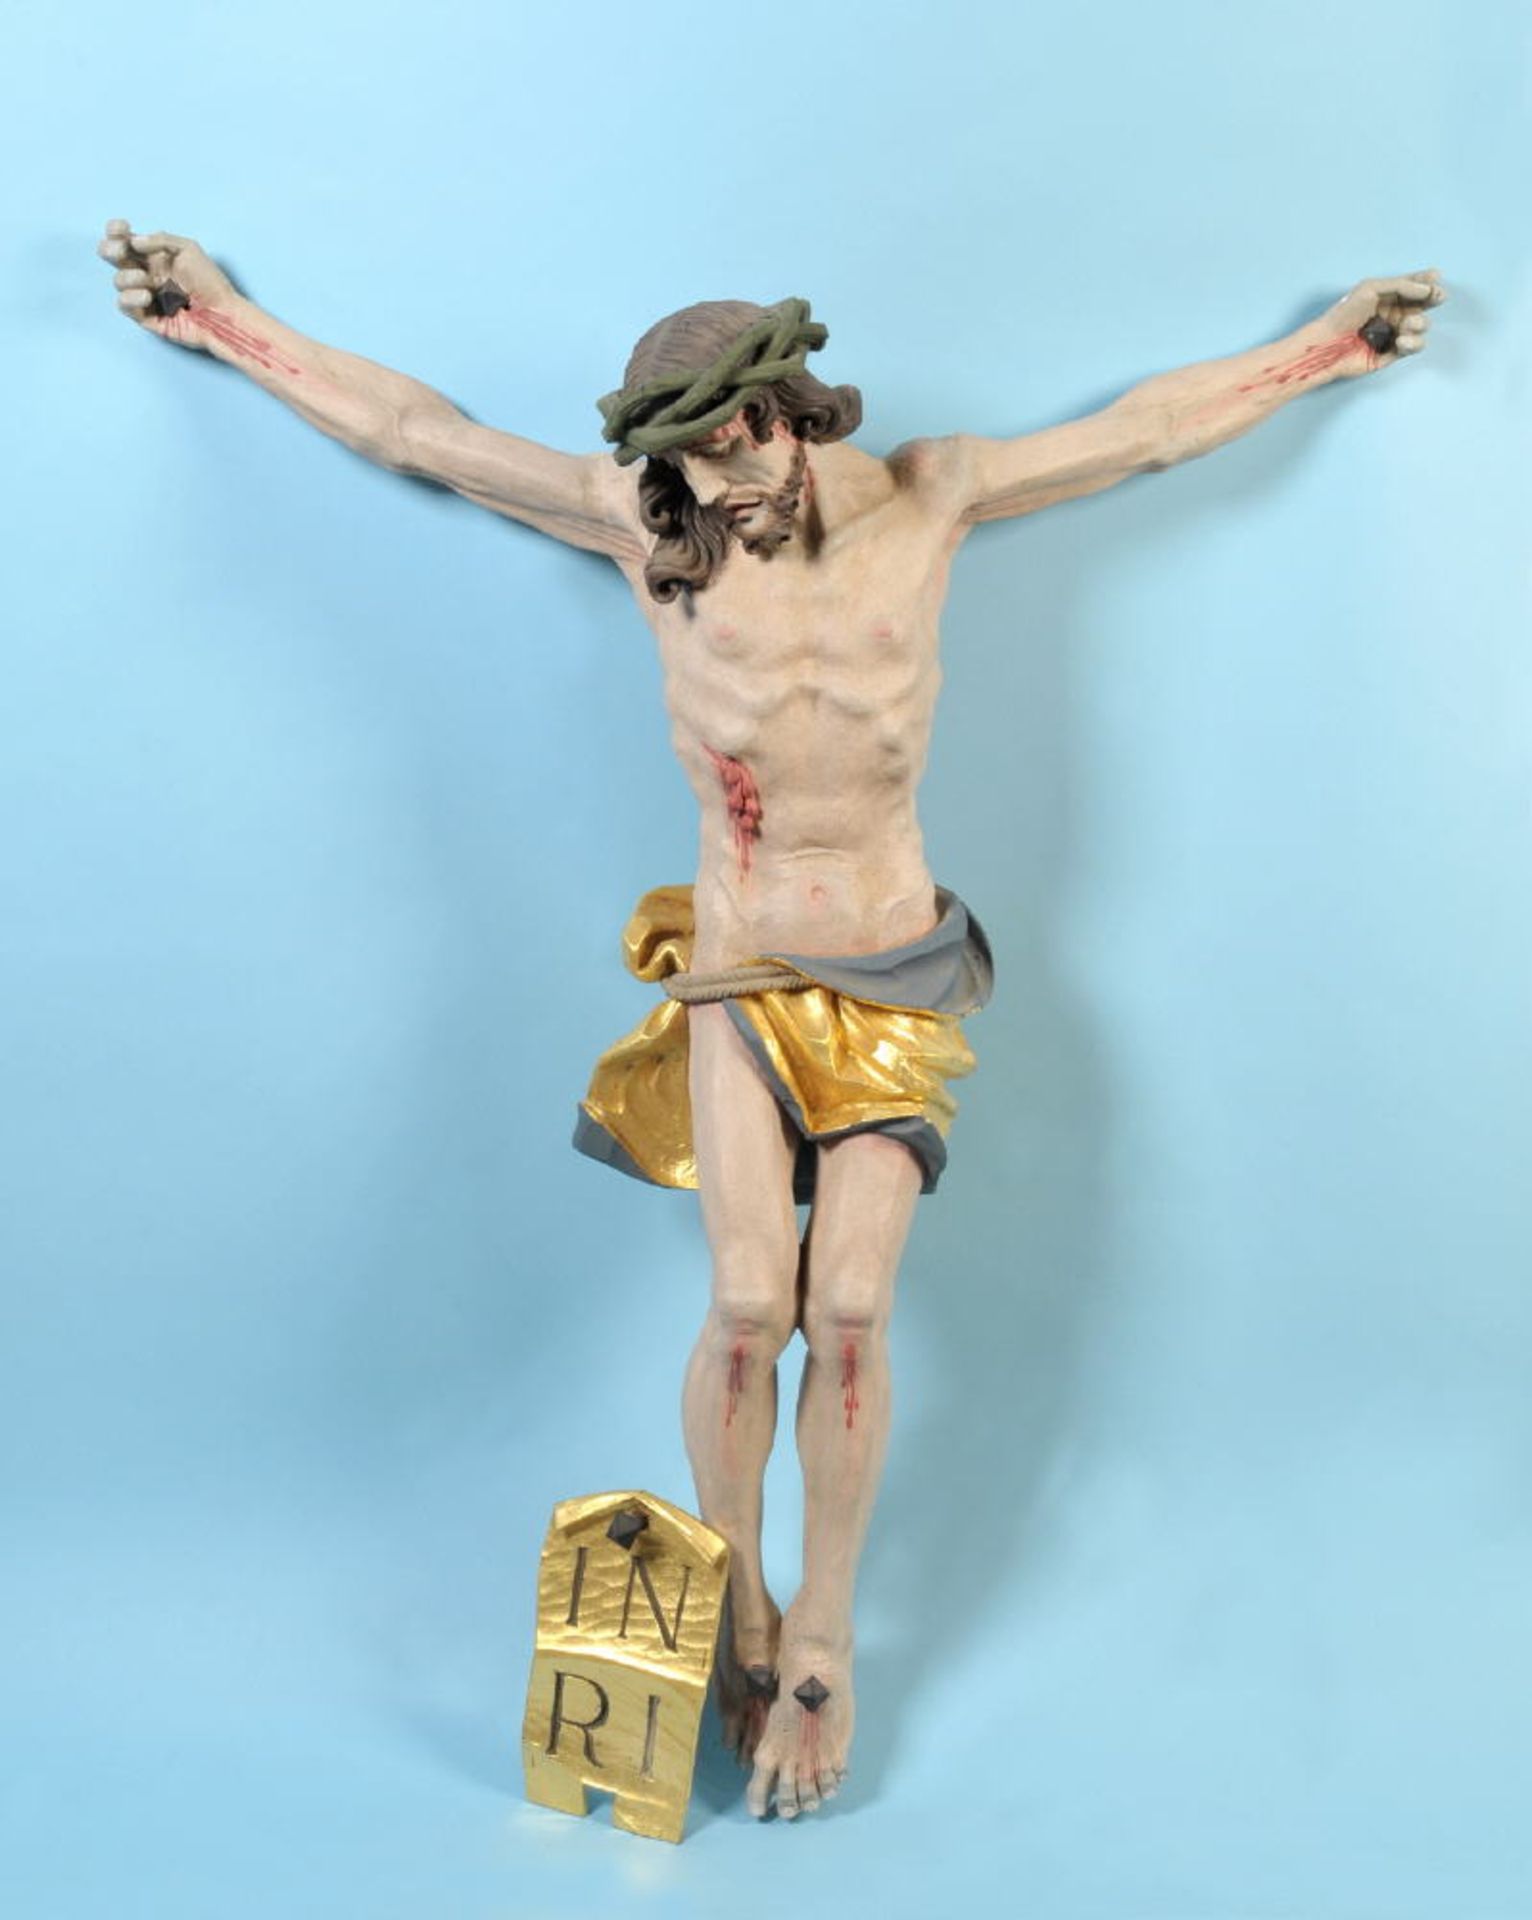 Christus-Korpus "Josef Konrad, Reicholtsried"Holz, farbig gefasst, H= 118 cm, 4-Nagel-Typus, dazu